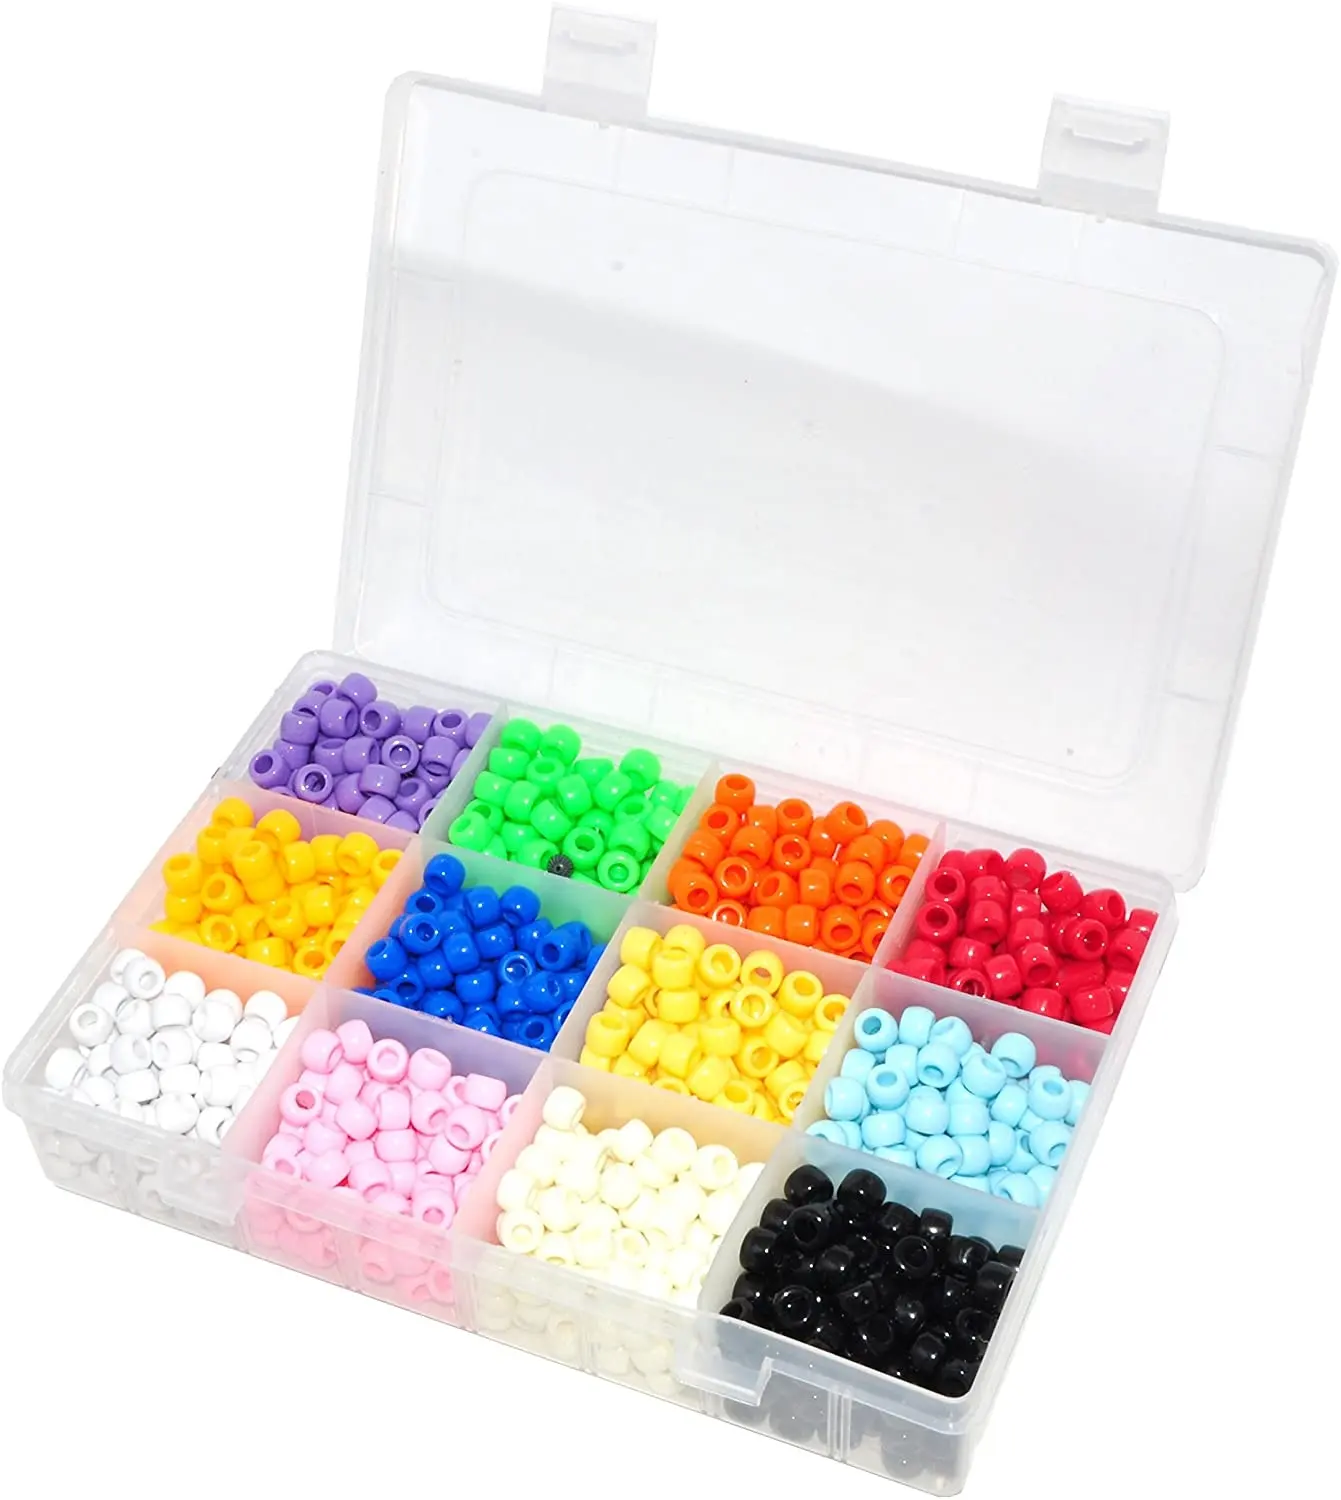 शैक्षिक खिलौने Diy बच्चों शिल्प लचीला 12 रंग ट्रे Perler मोती